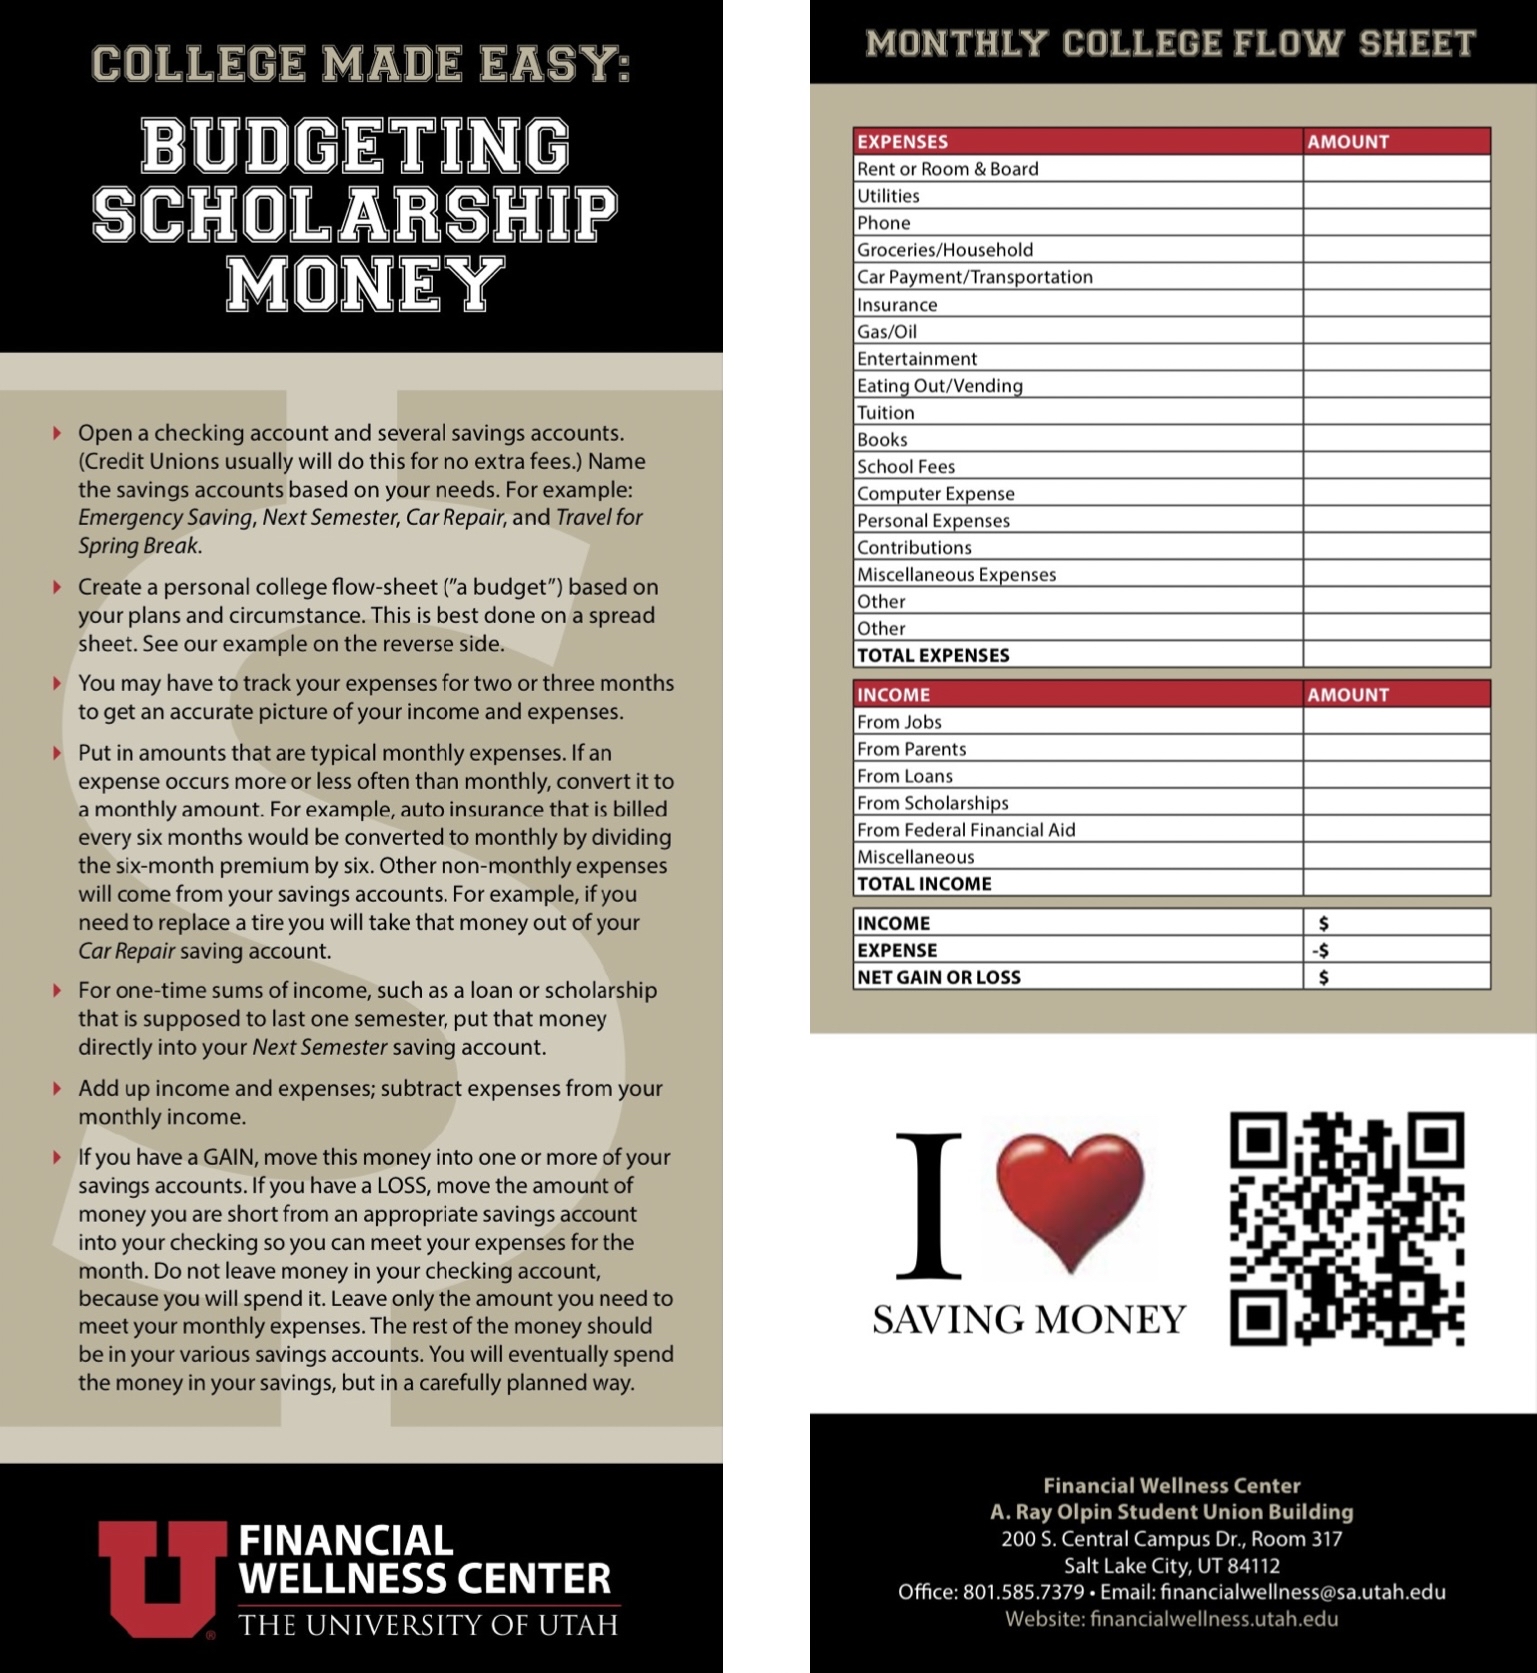 Budgeting Scholarship Money PDF